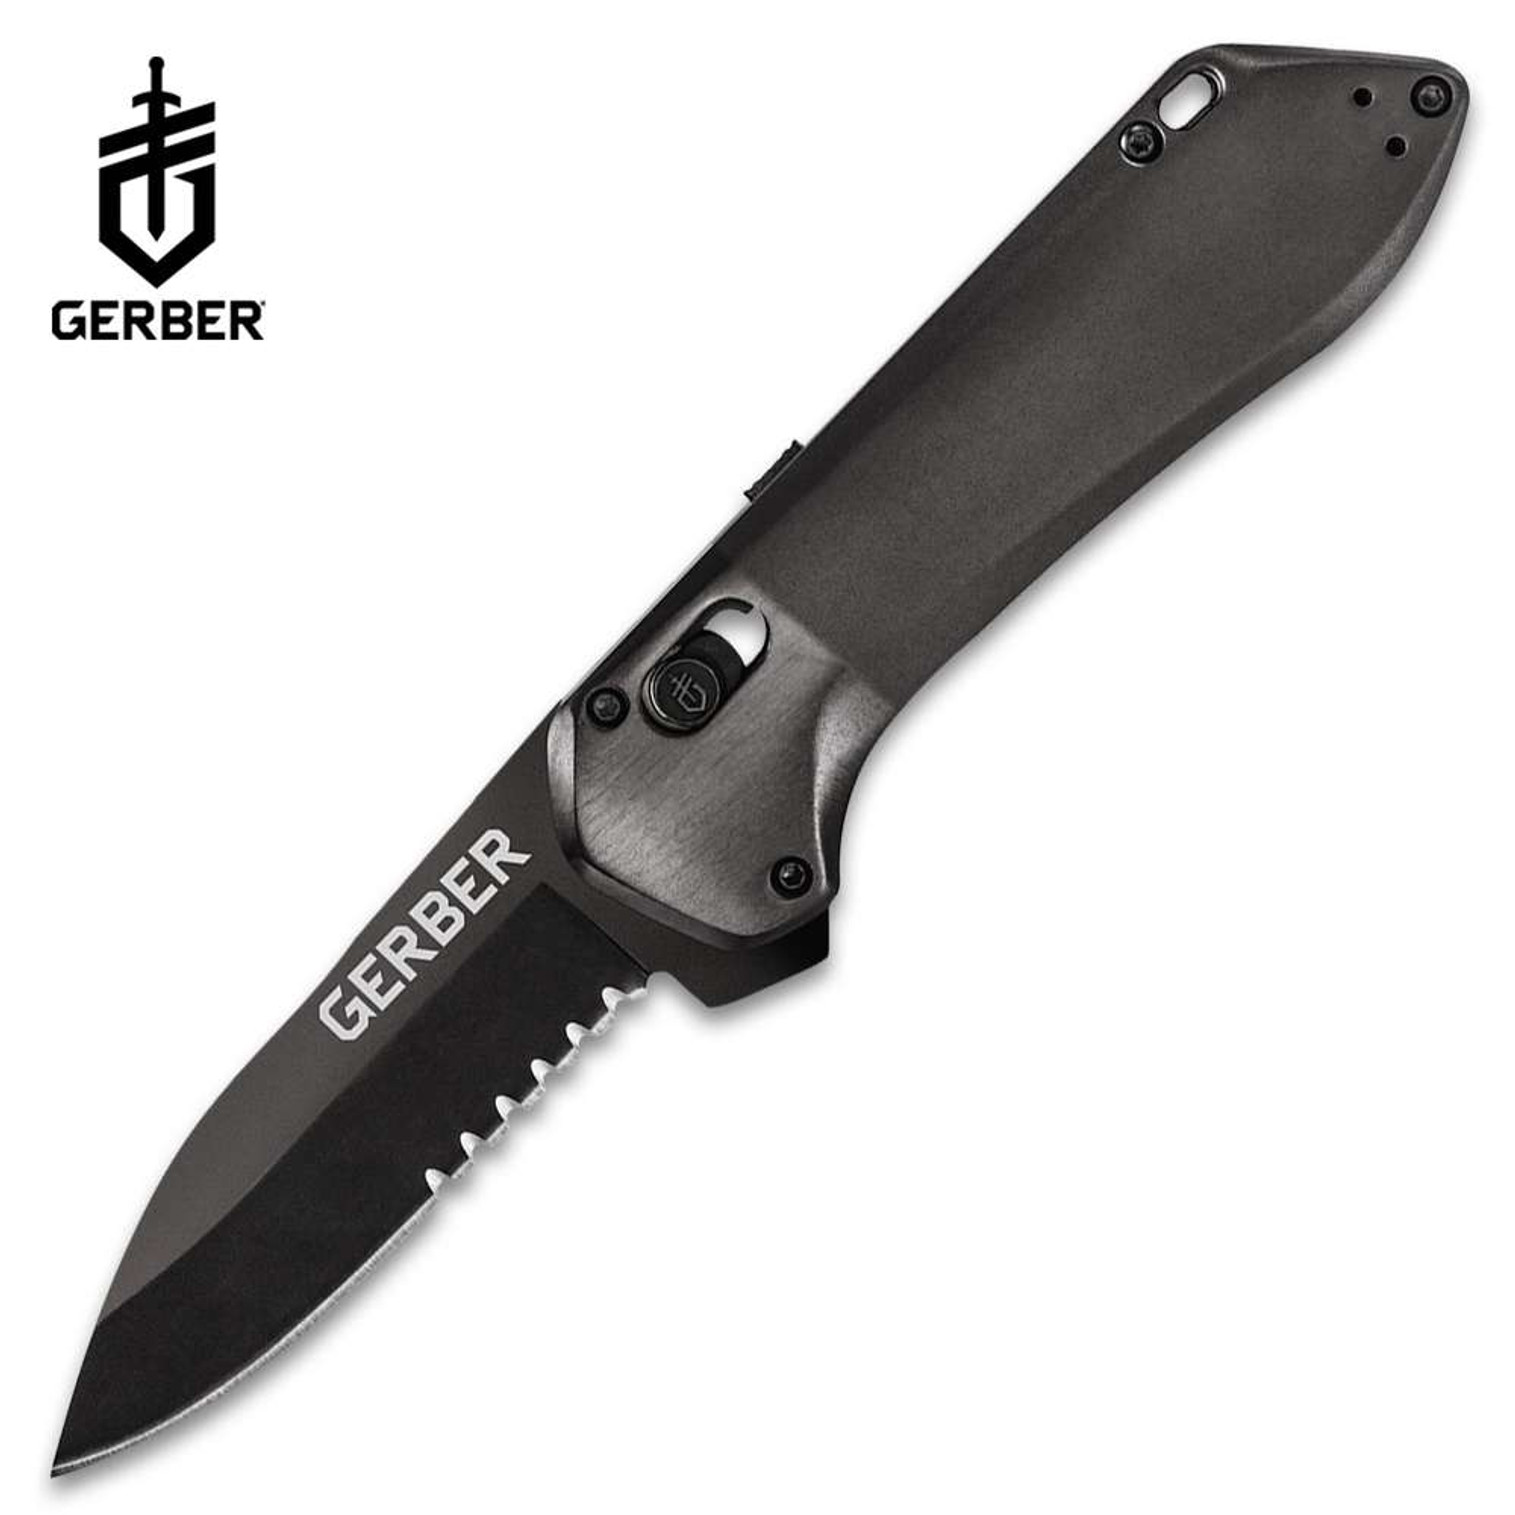 Gerber Black Highbrow Compact Pocket Knife